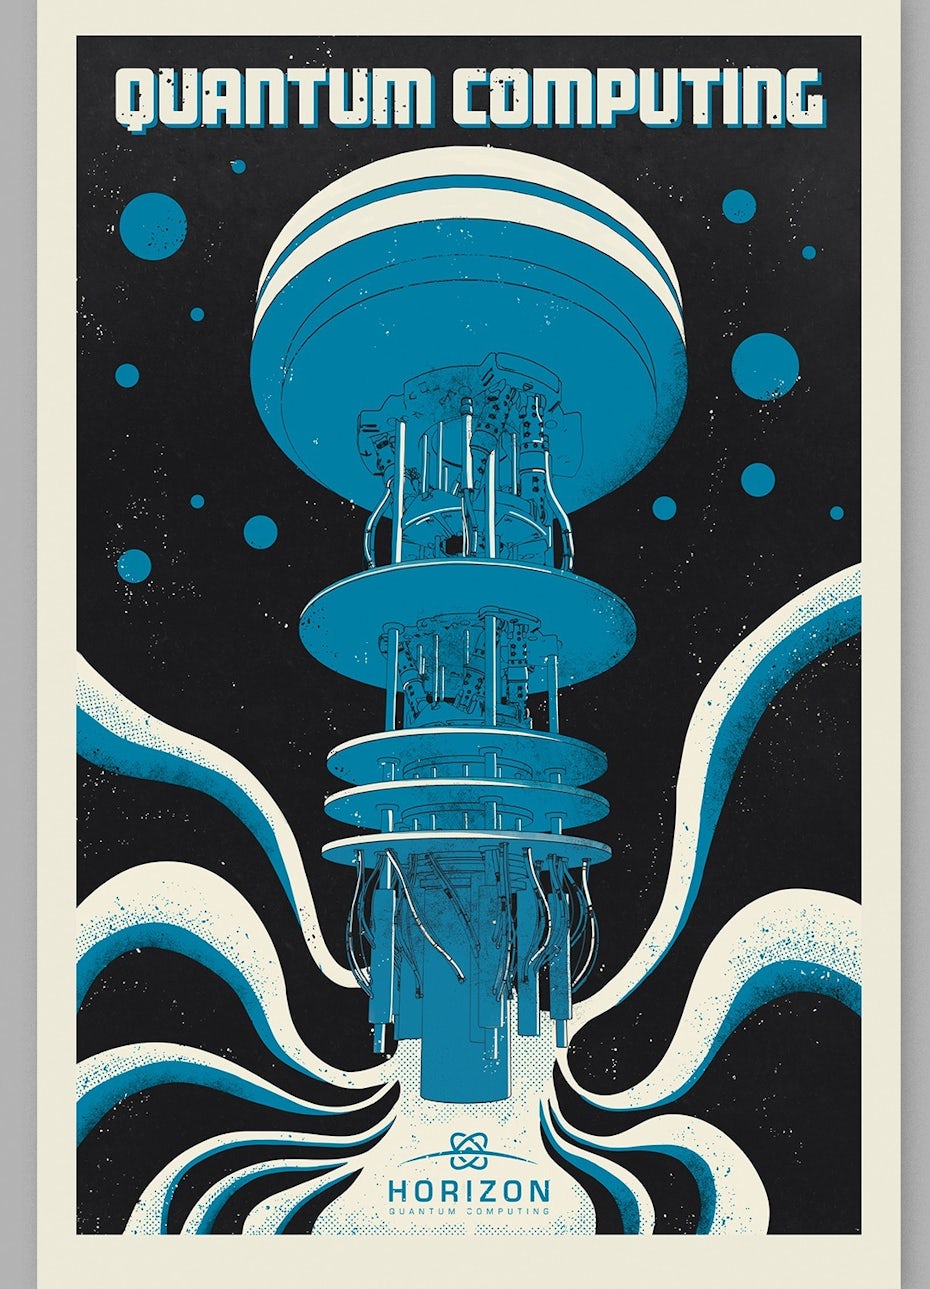 Blue retro futuristic poster design for computing brand